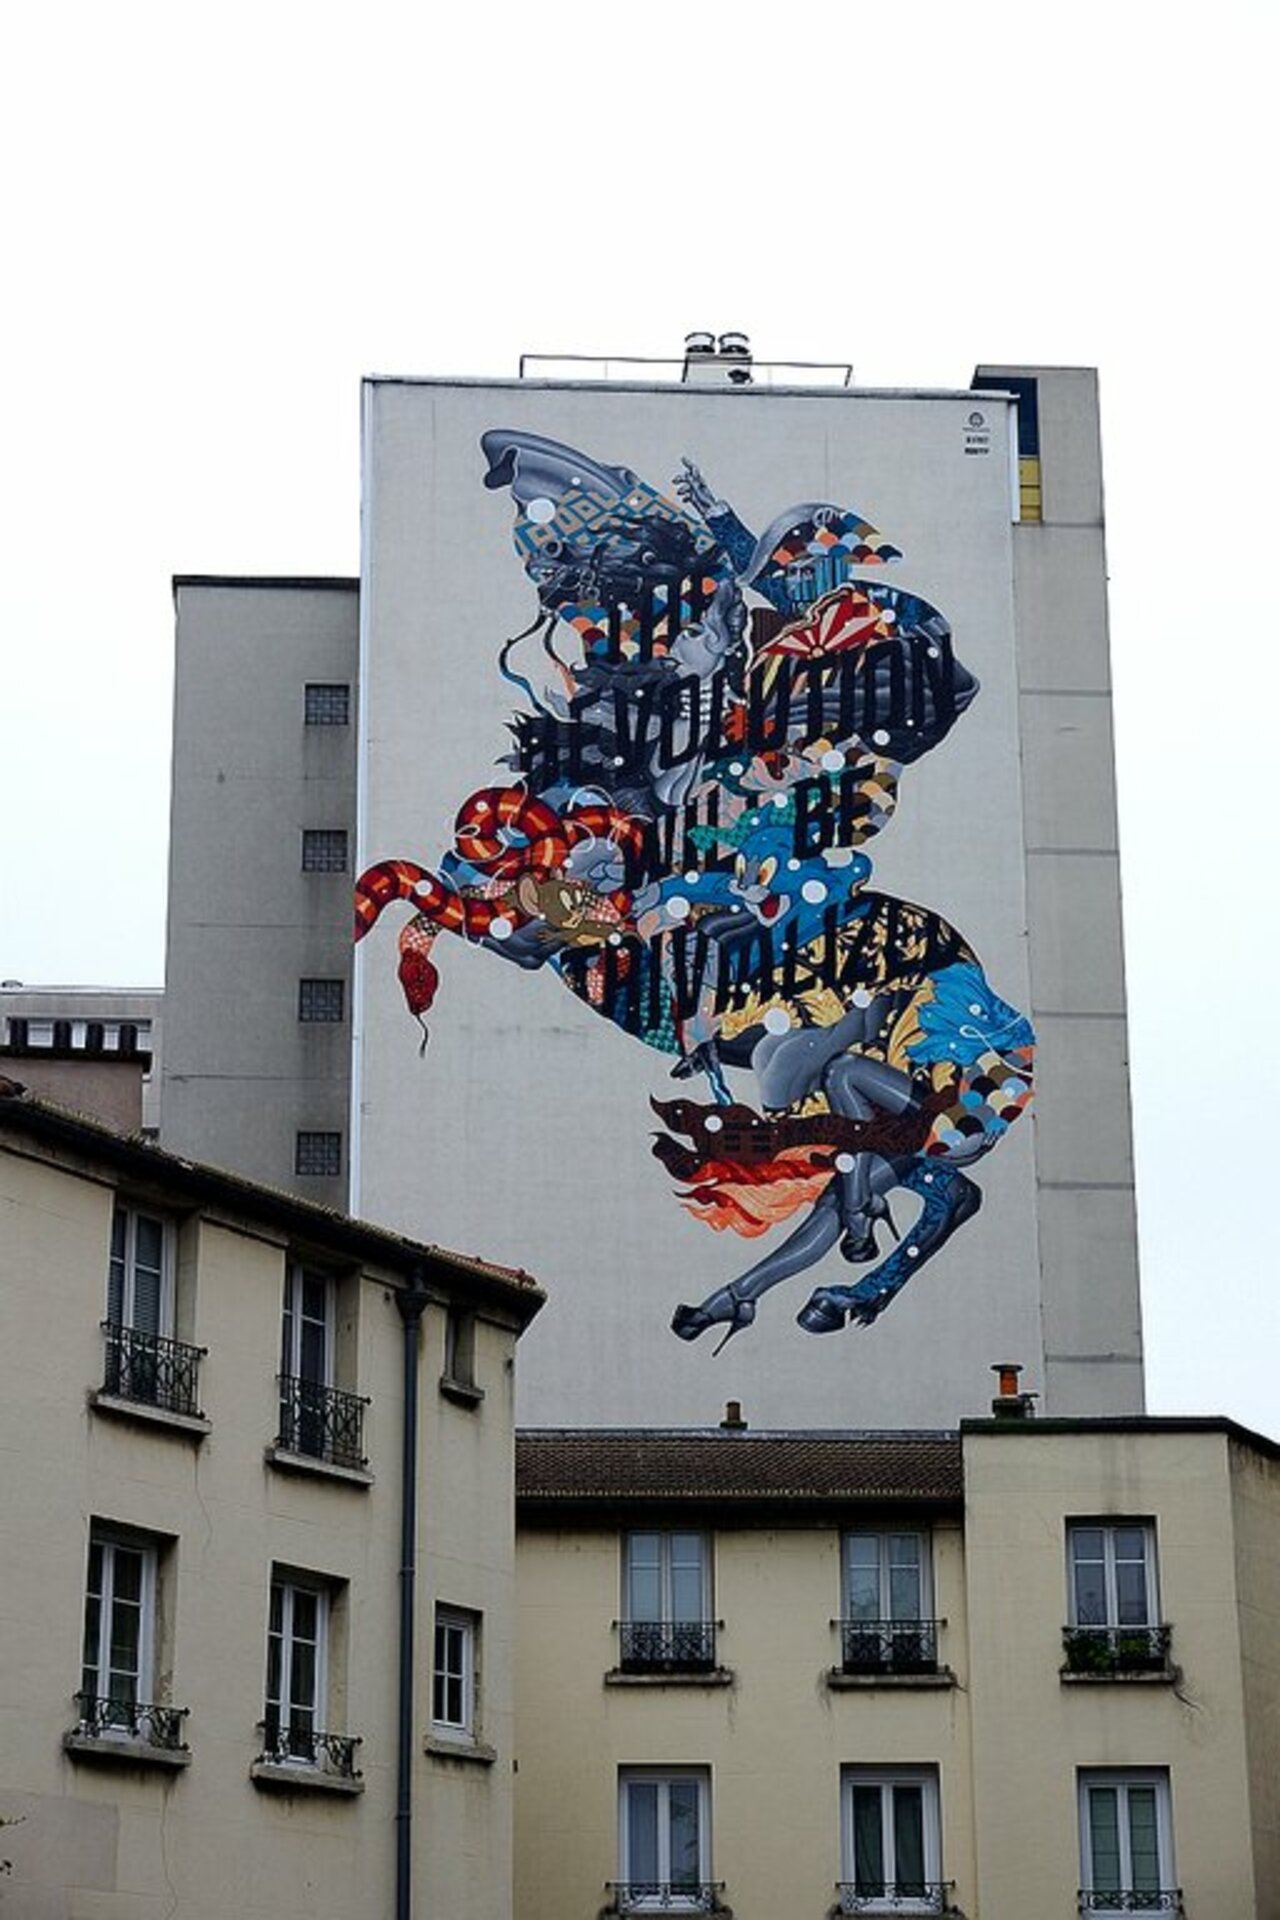 Street Art by anonymous in #Paris http://www.urbacolors.com #art #mural #graffiti #streetart https://t.co/MSAMqMfV56